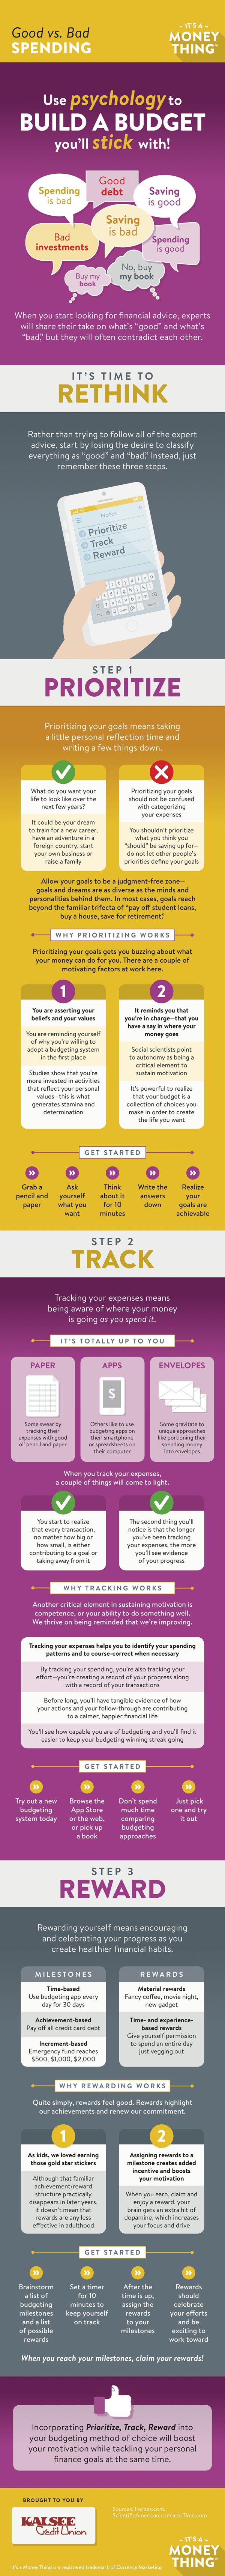 Good vs Bad Spending infographic, click for transcription